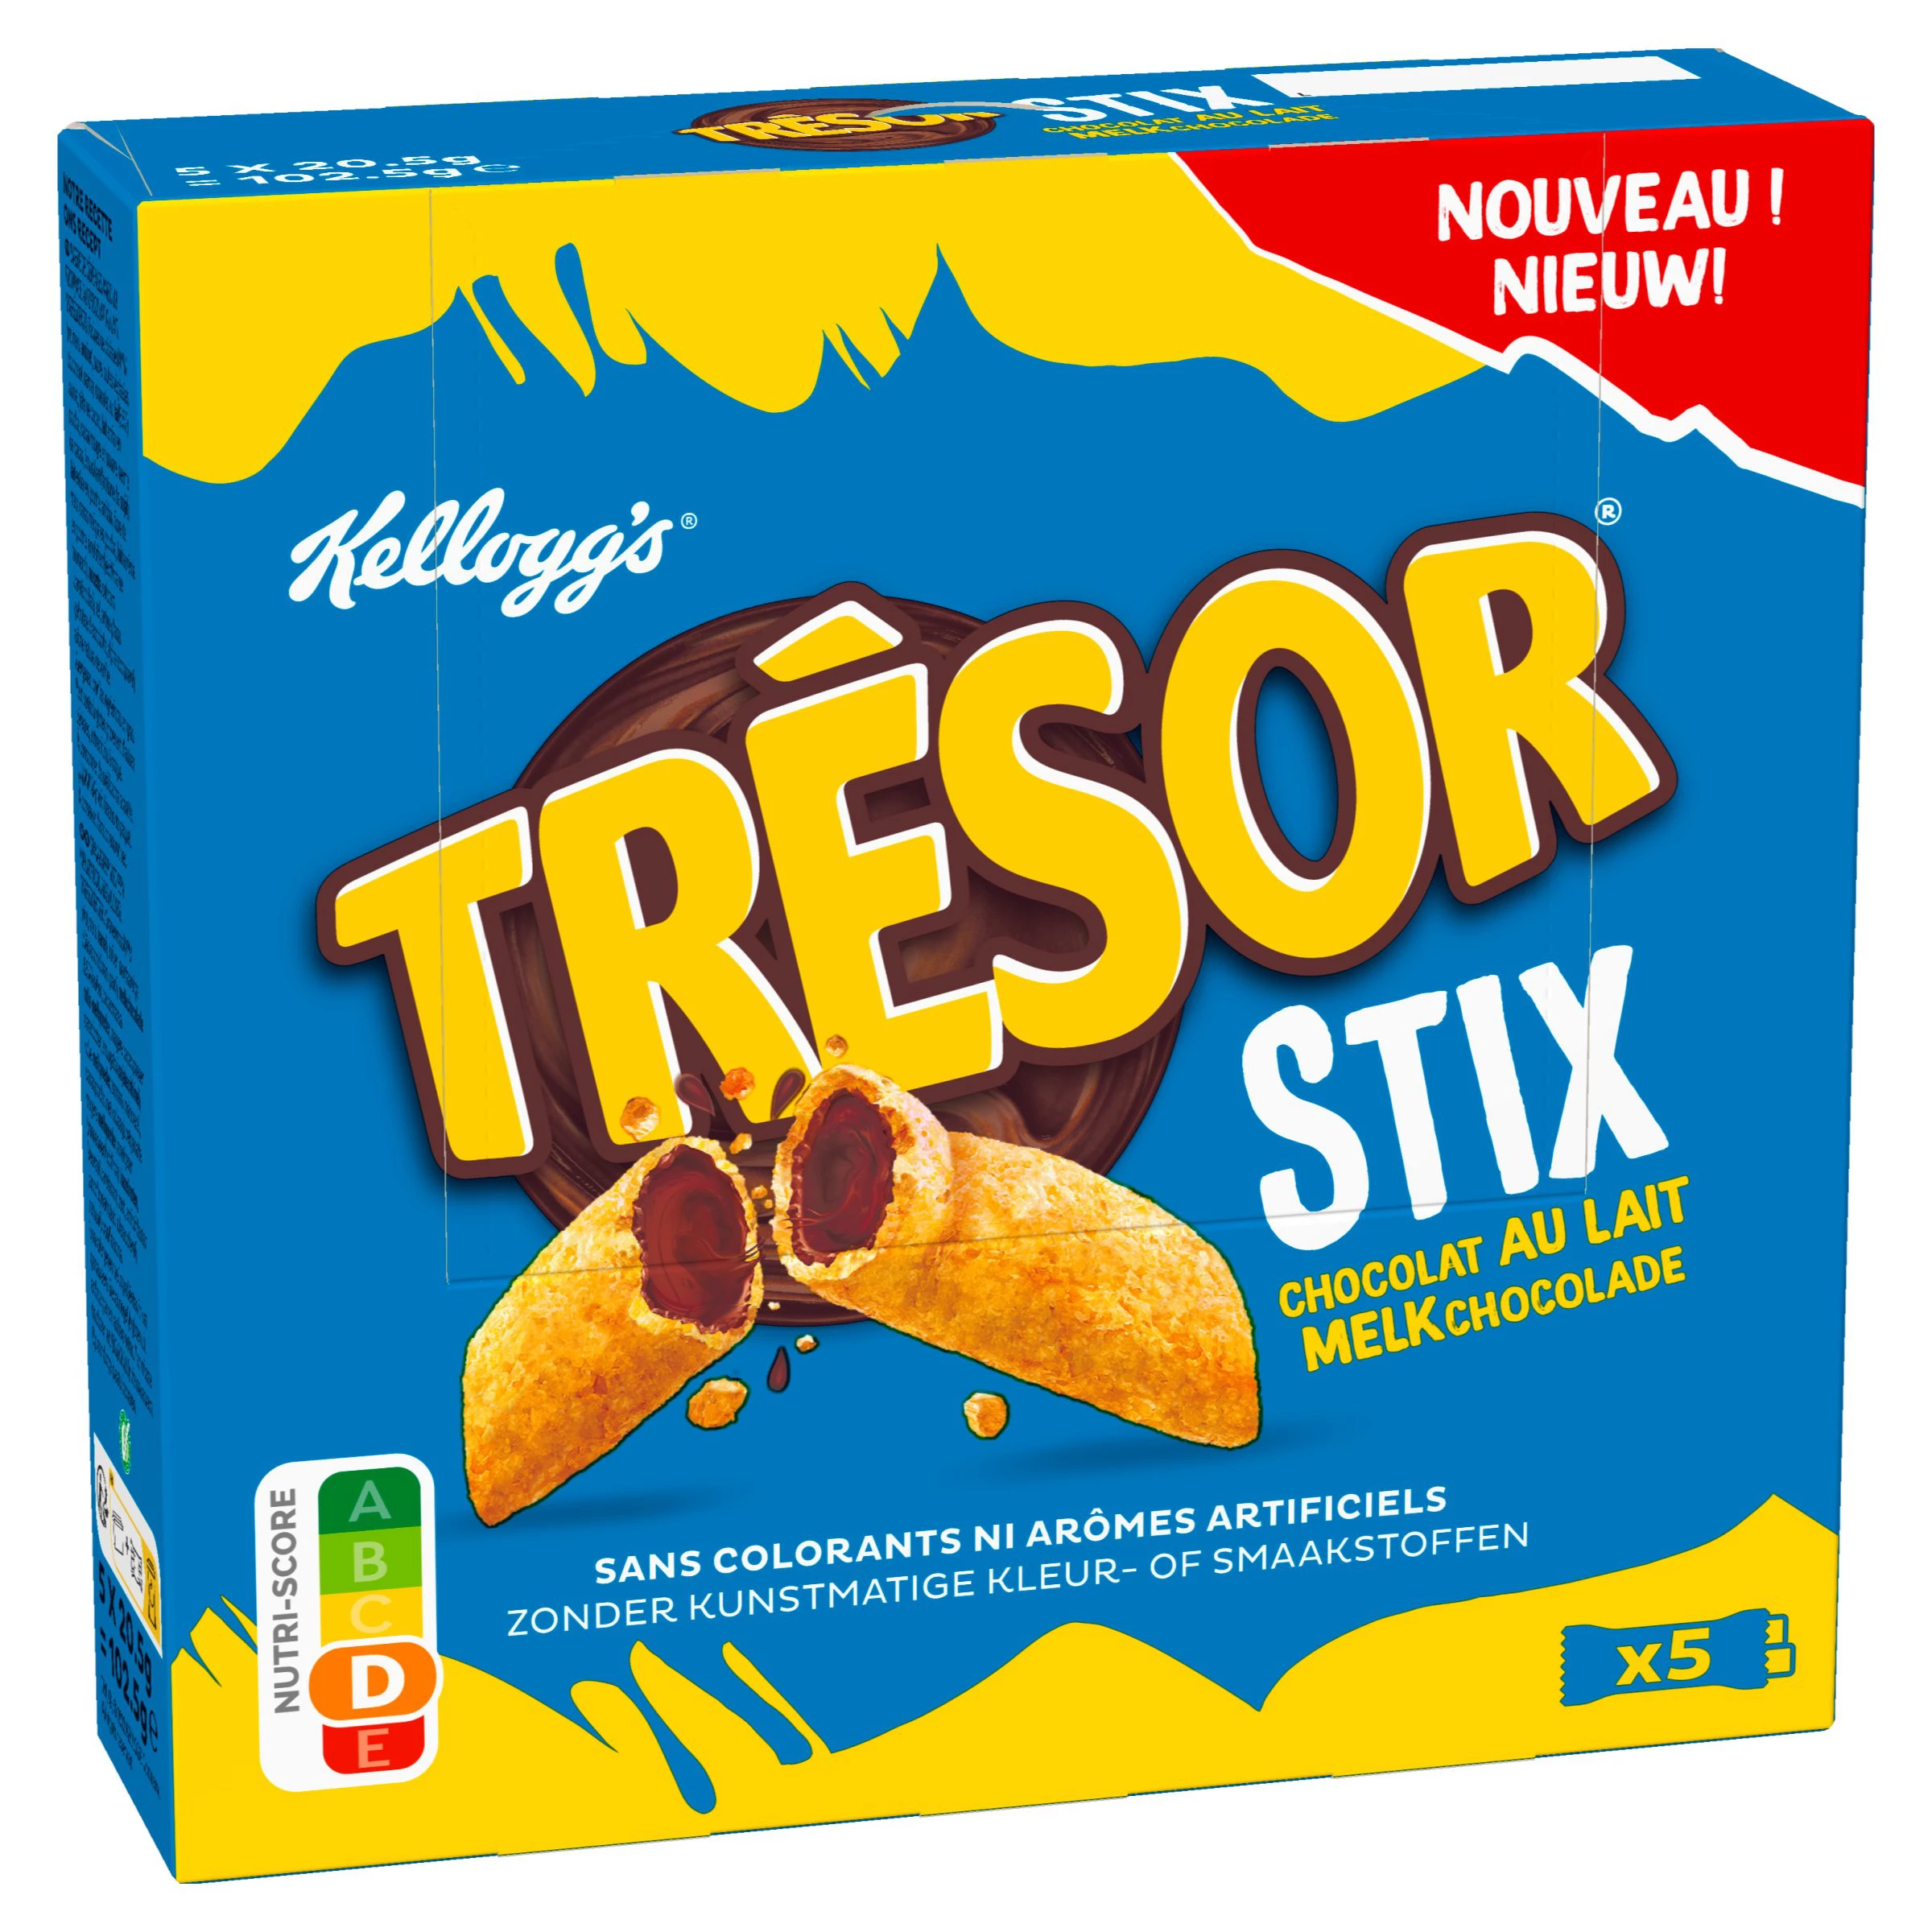 Céréales au Chocolat au Lait Tresor Sticks, x5, 103g - KELLOGG'S